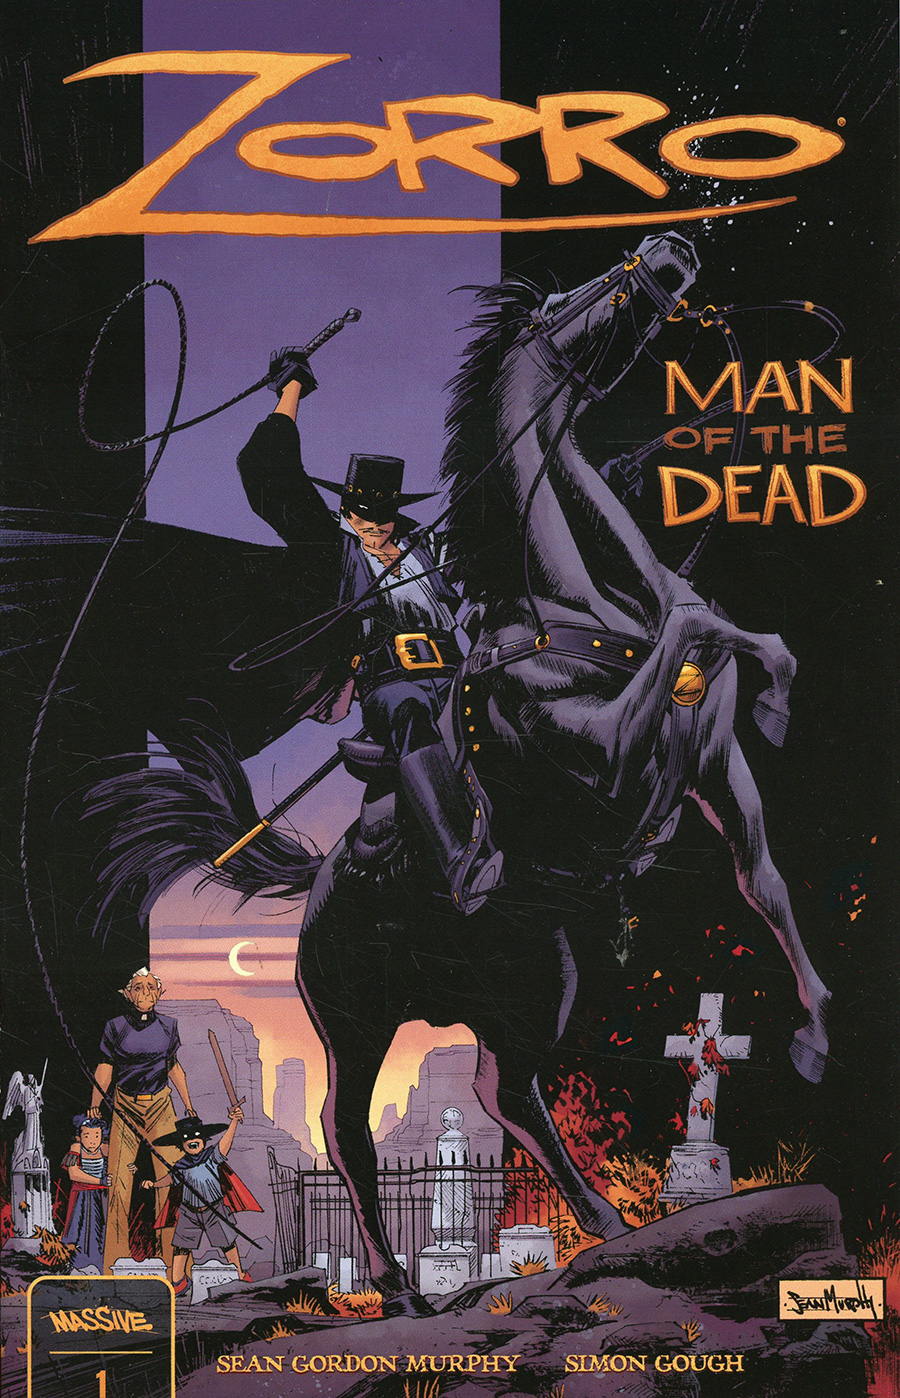 Zorro Man Of The Dead #1 Cover A Regular Sean Gordon Murphy Cover